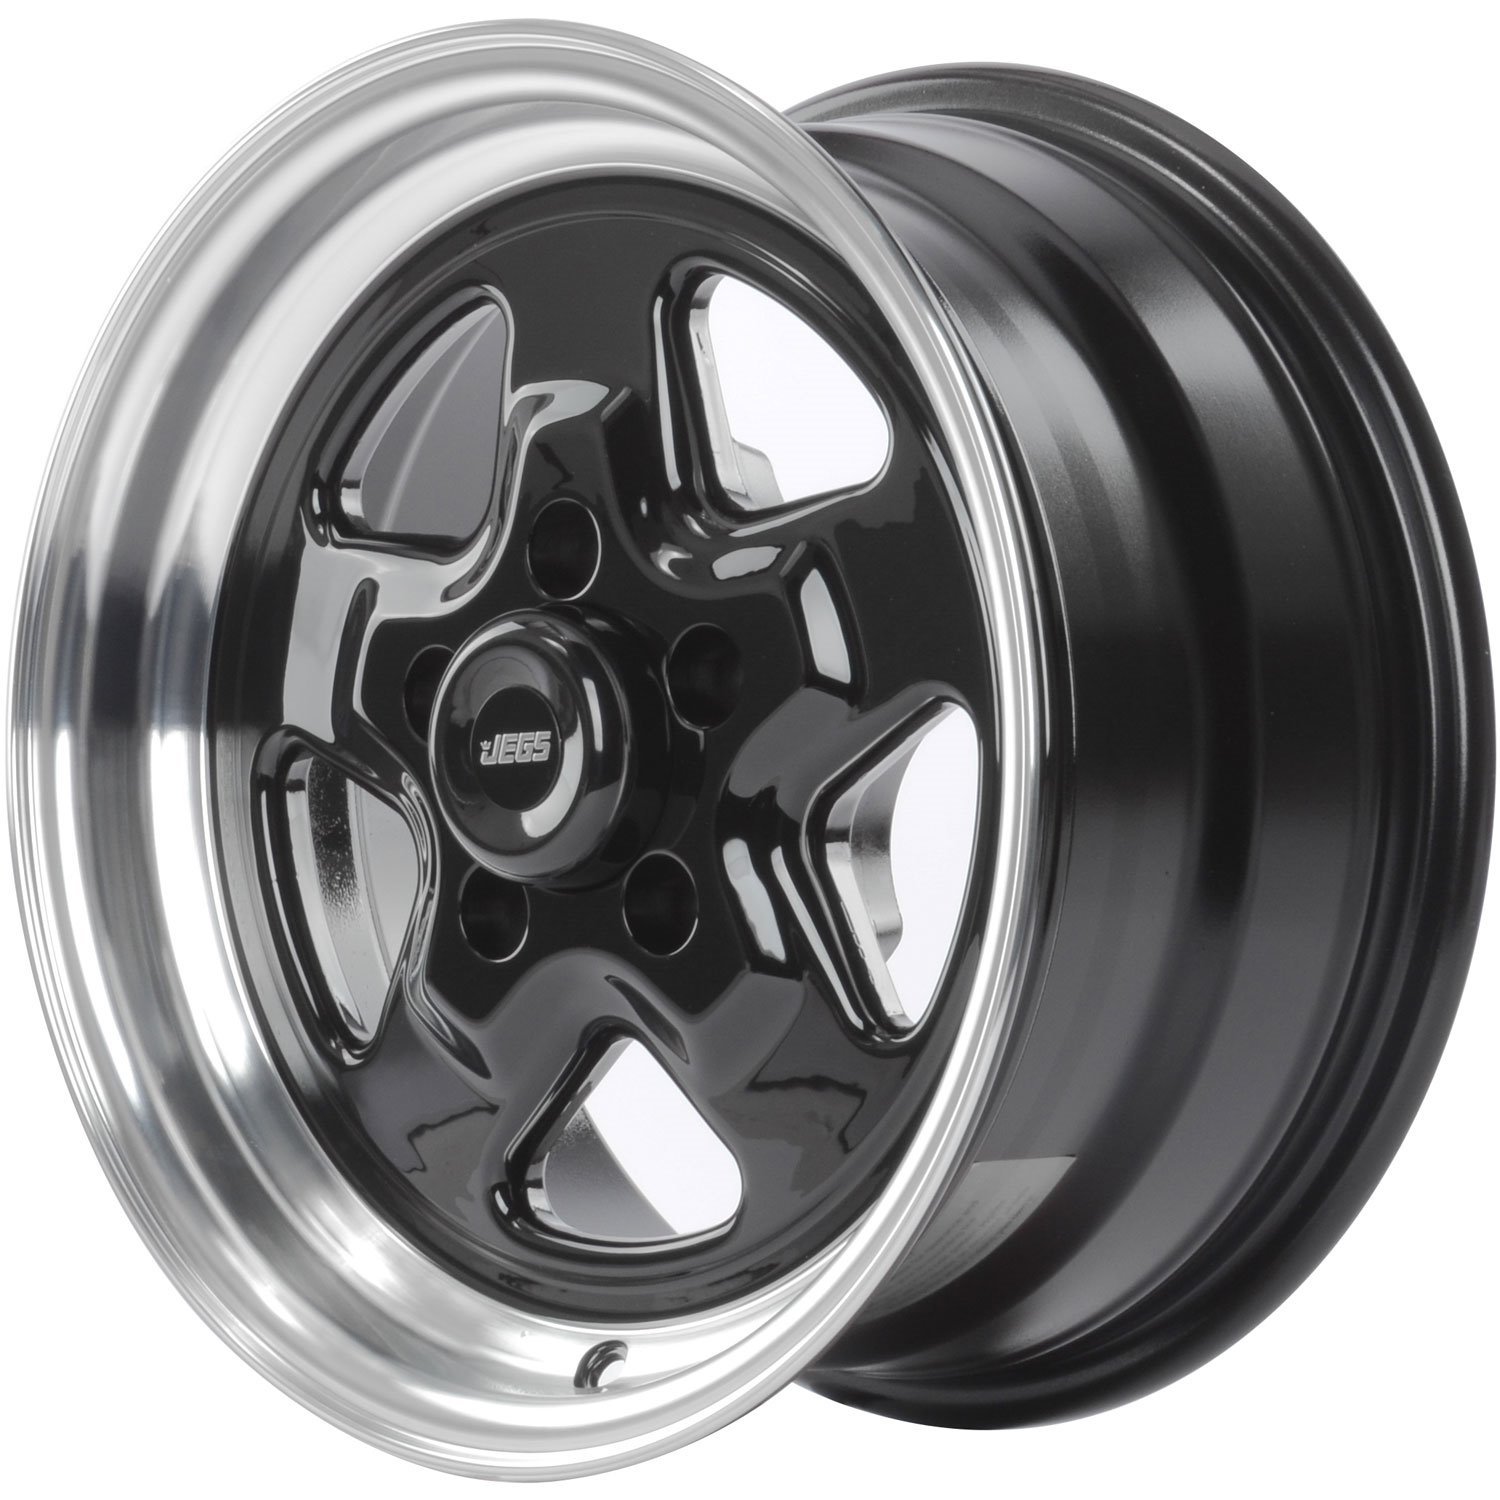 Sport Star 5-Spoke Wheel [Size: 15" x 7"] Polished Lip with Black Spokes